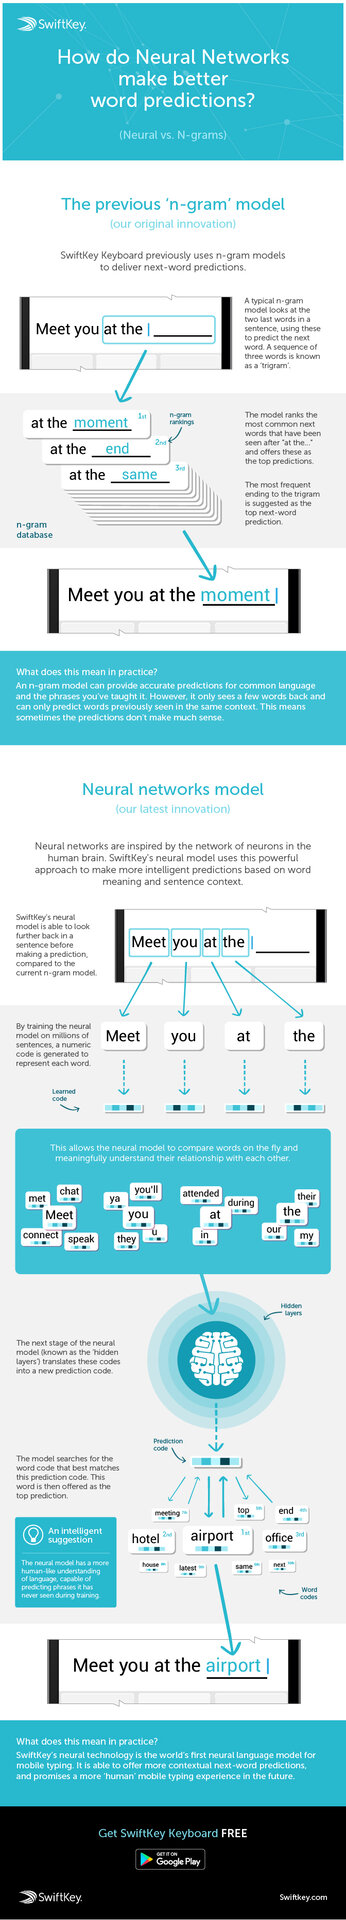 Swiftkeyニューラルネットワークインフォグラフィック